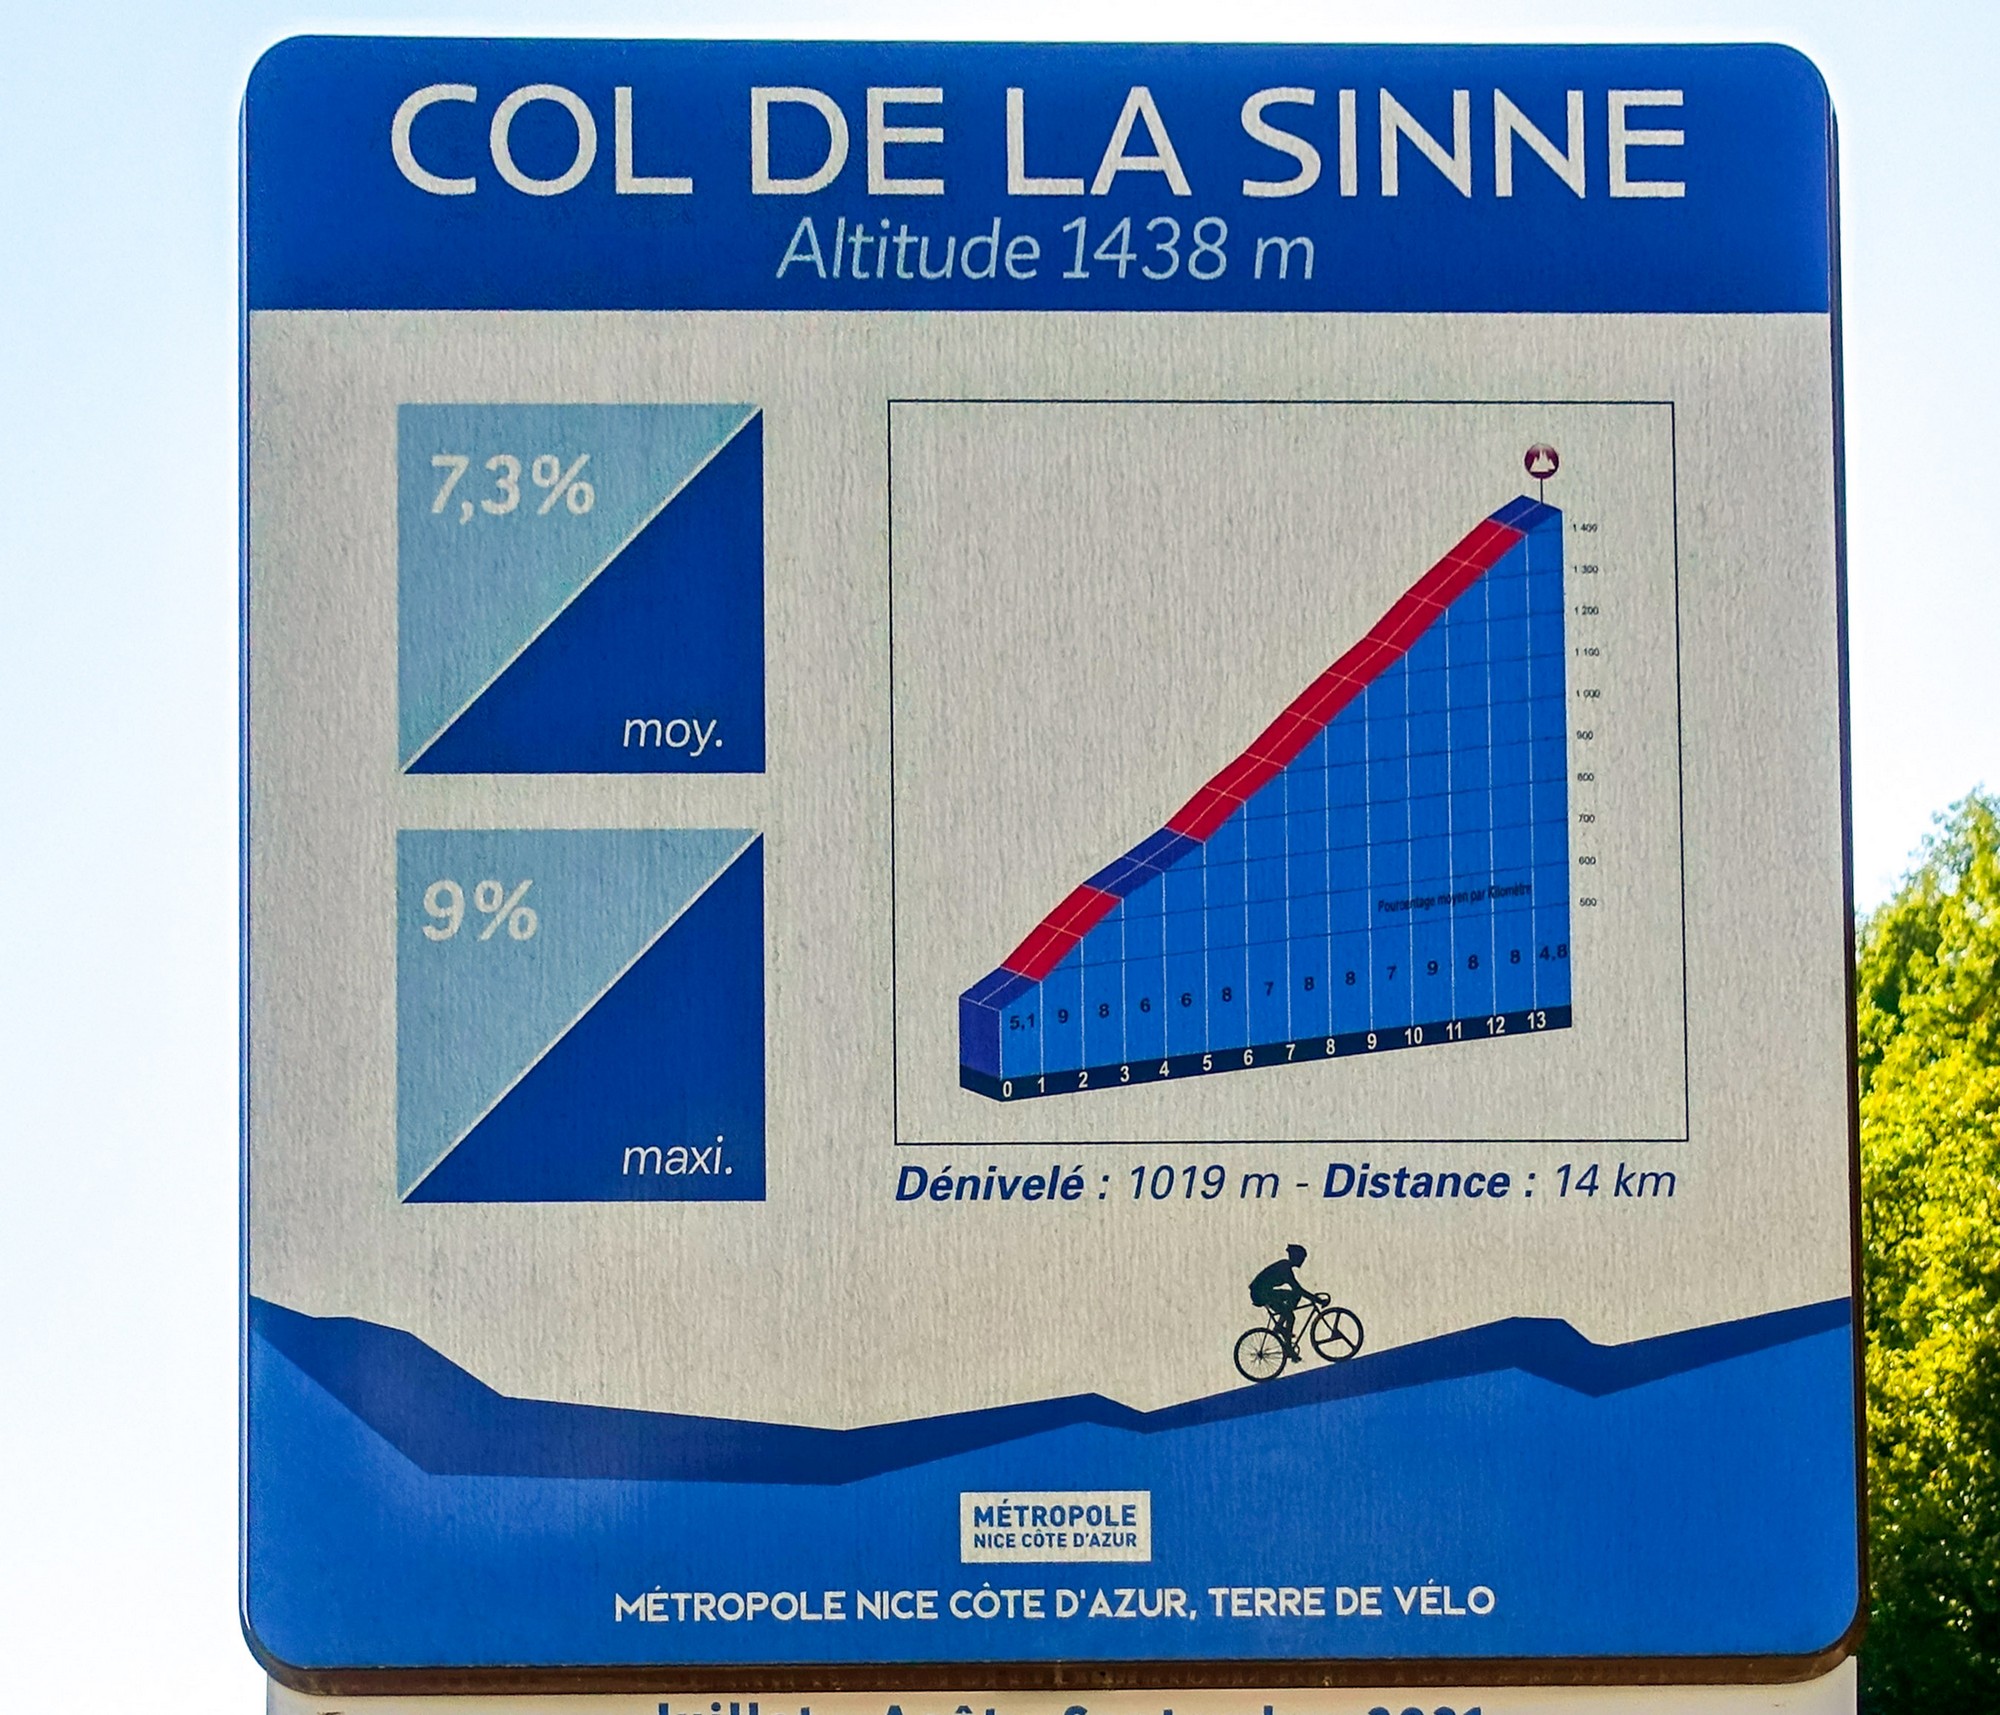 Col de la Sinne information road sign with profile